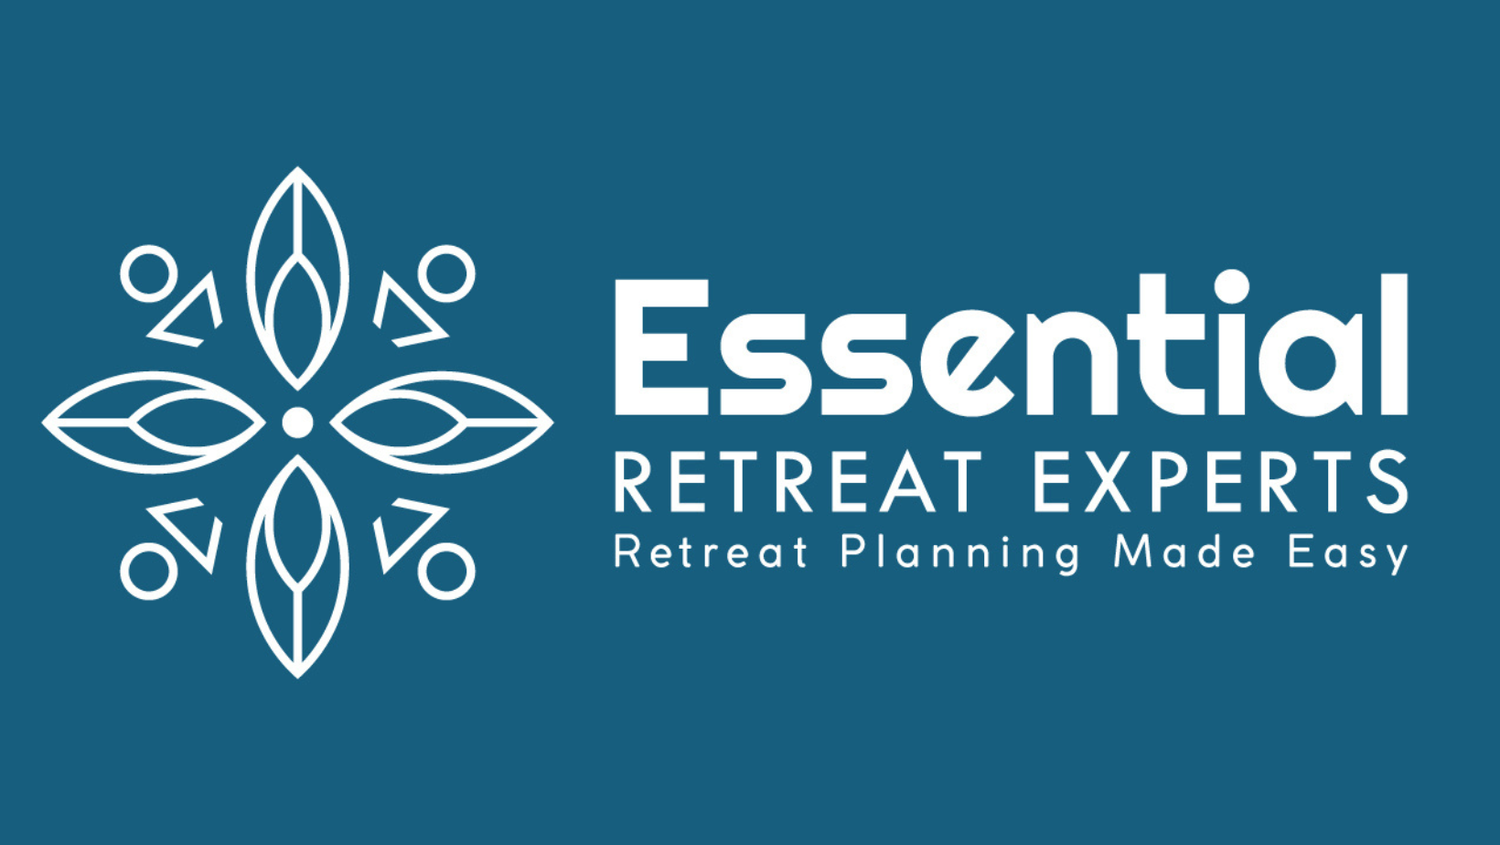 Essential Retreat Experts